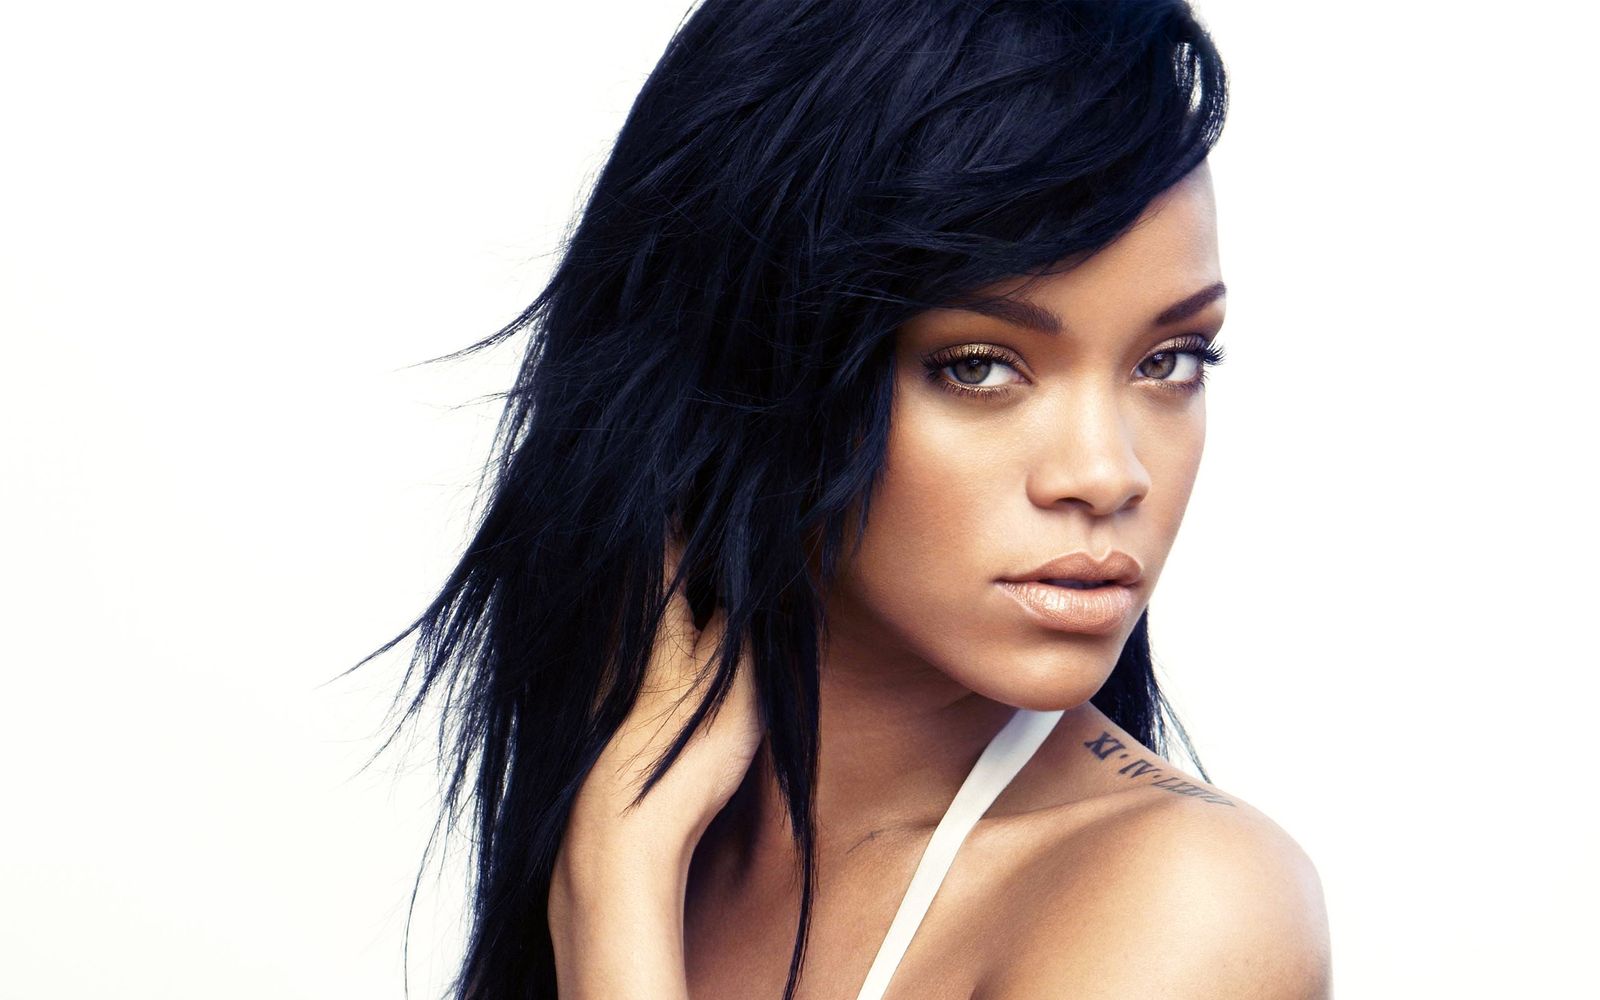 Rihanna Topped Digital Single’s Artist List